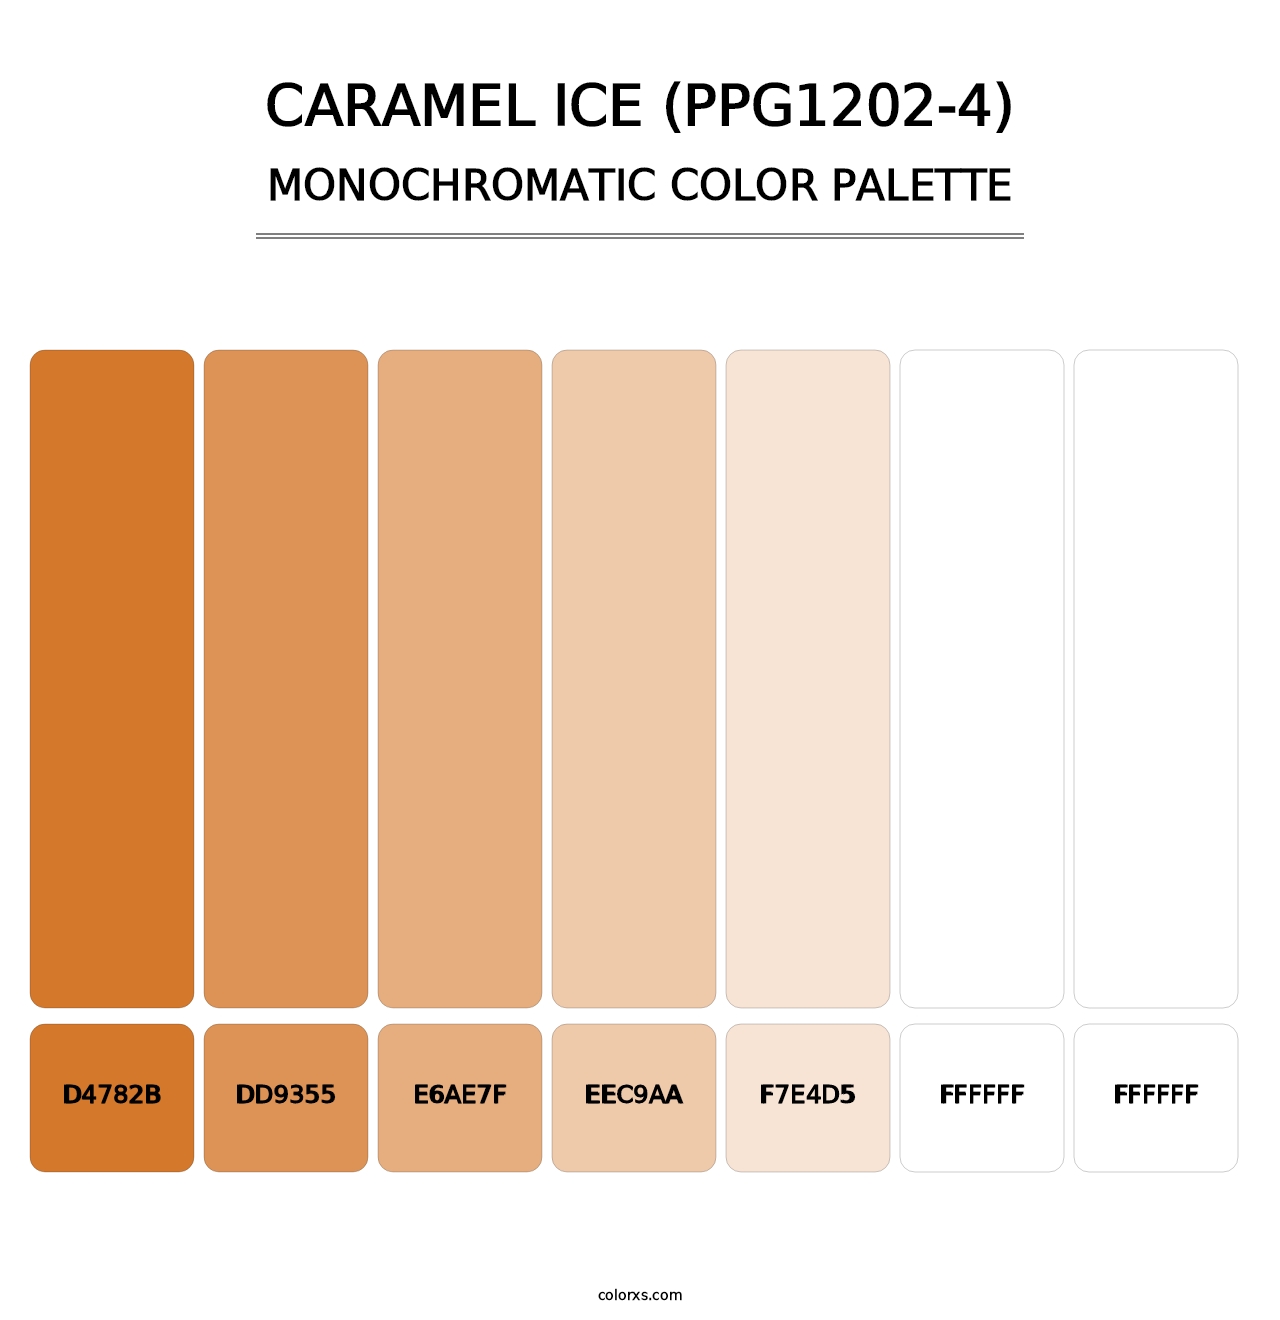 Caramel Ice (PPG1202-4) - Monochromatic Color Palette